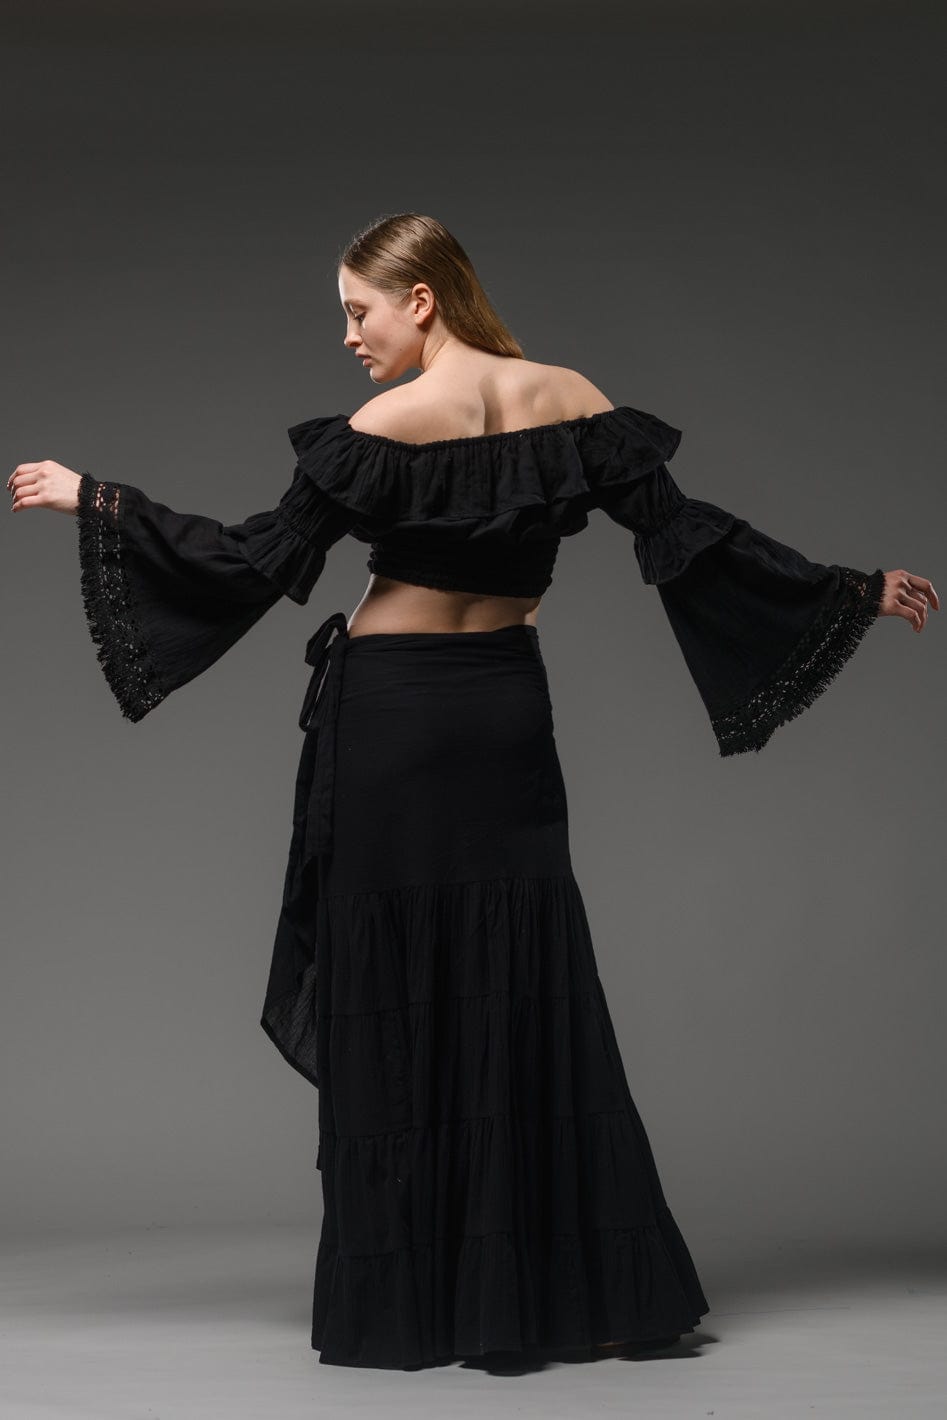 Bohemian chic gypsy fashion long wrap ruffled black cotton Skirt